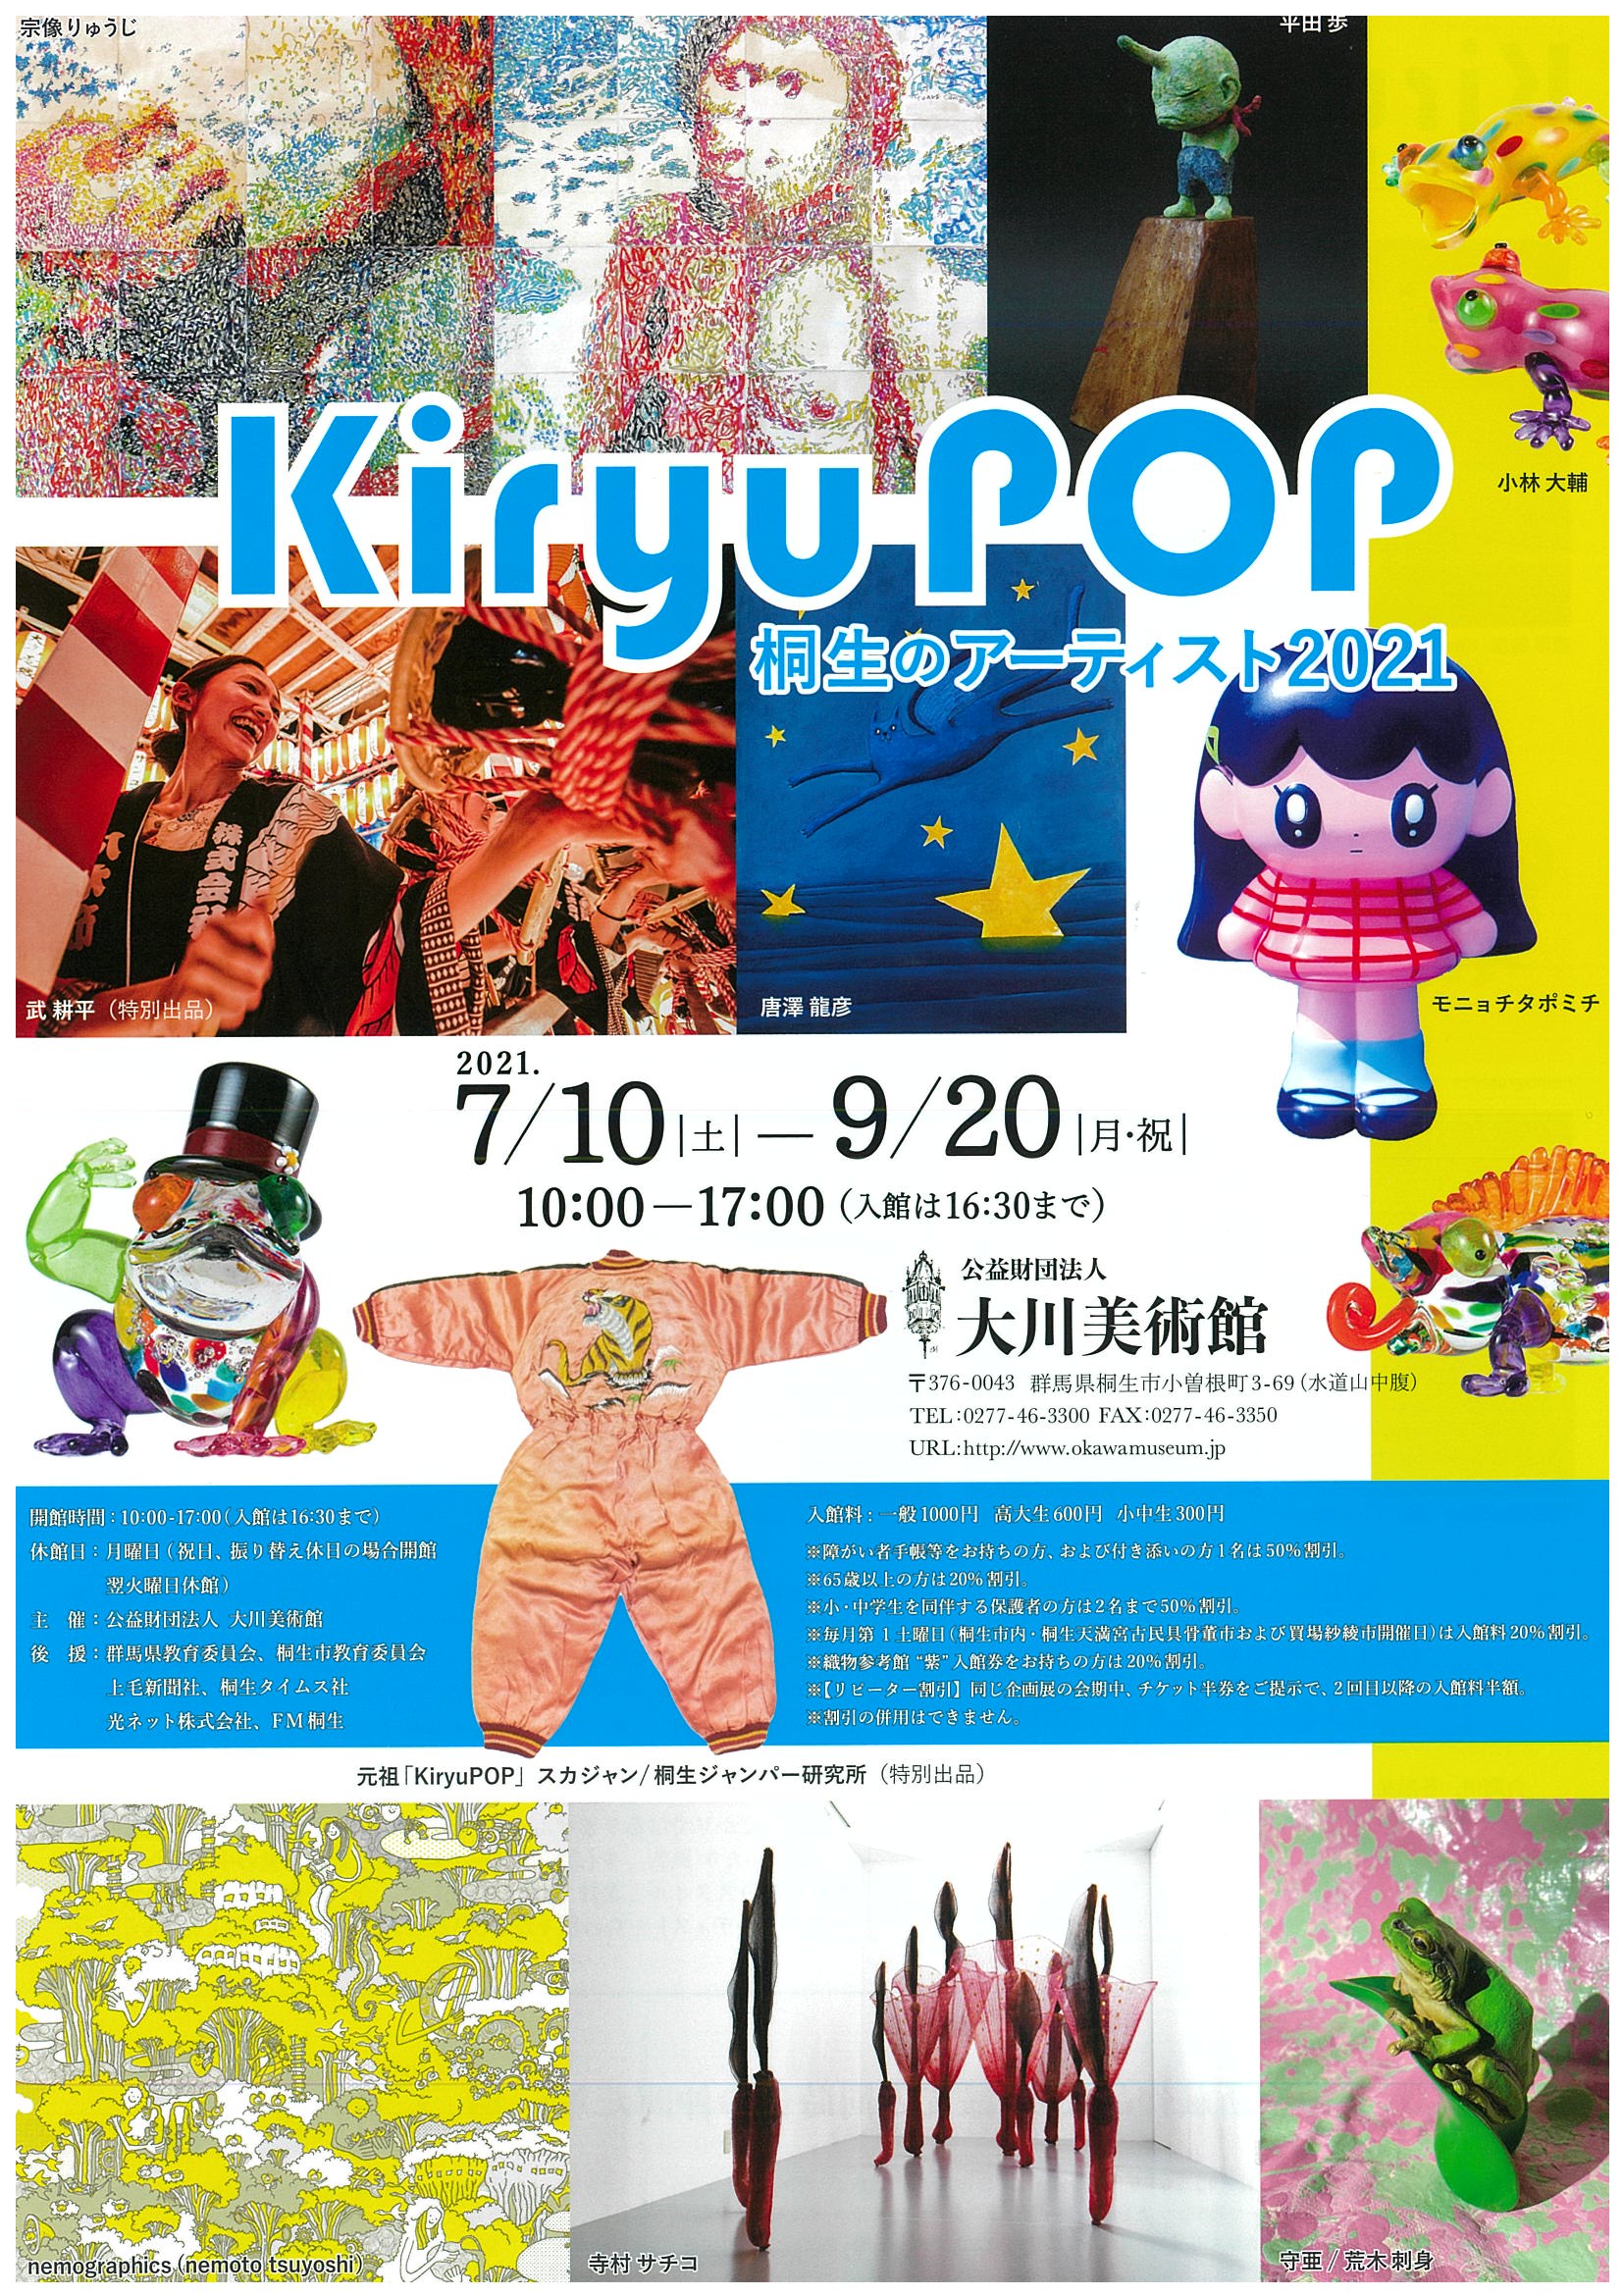 Kiryu POP　桐生のアーティスト2021
2021年 7月10日（土）～9月20日（月・祝）